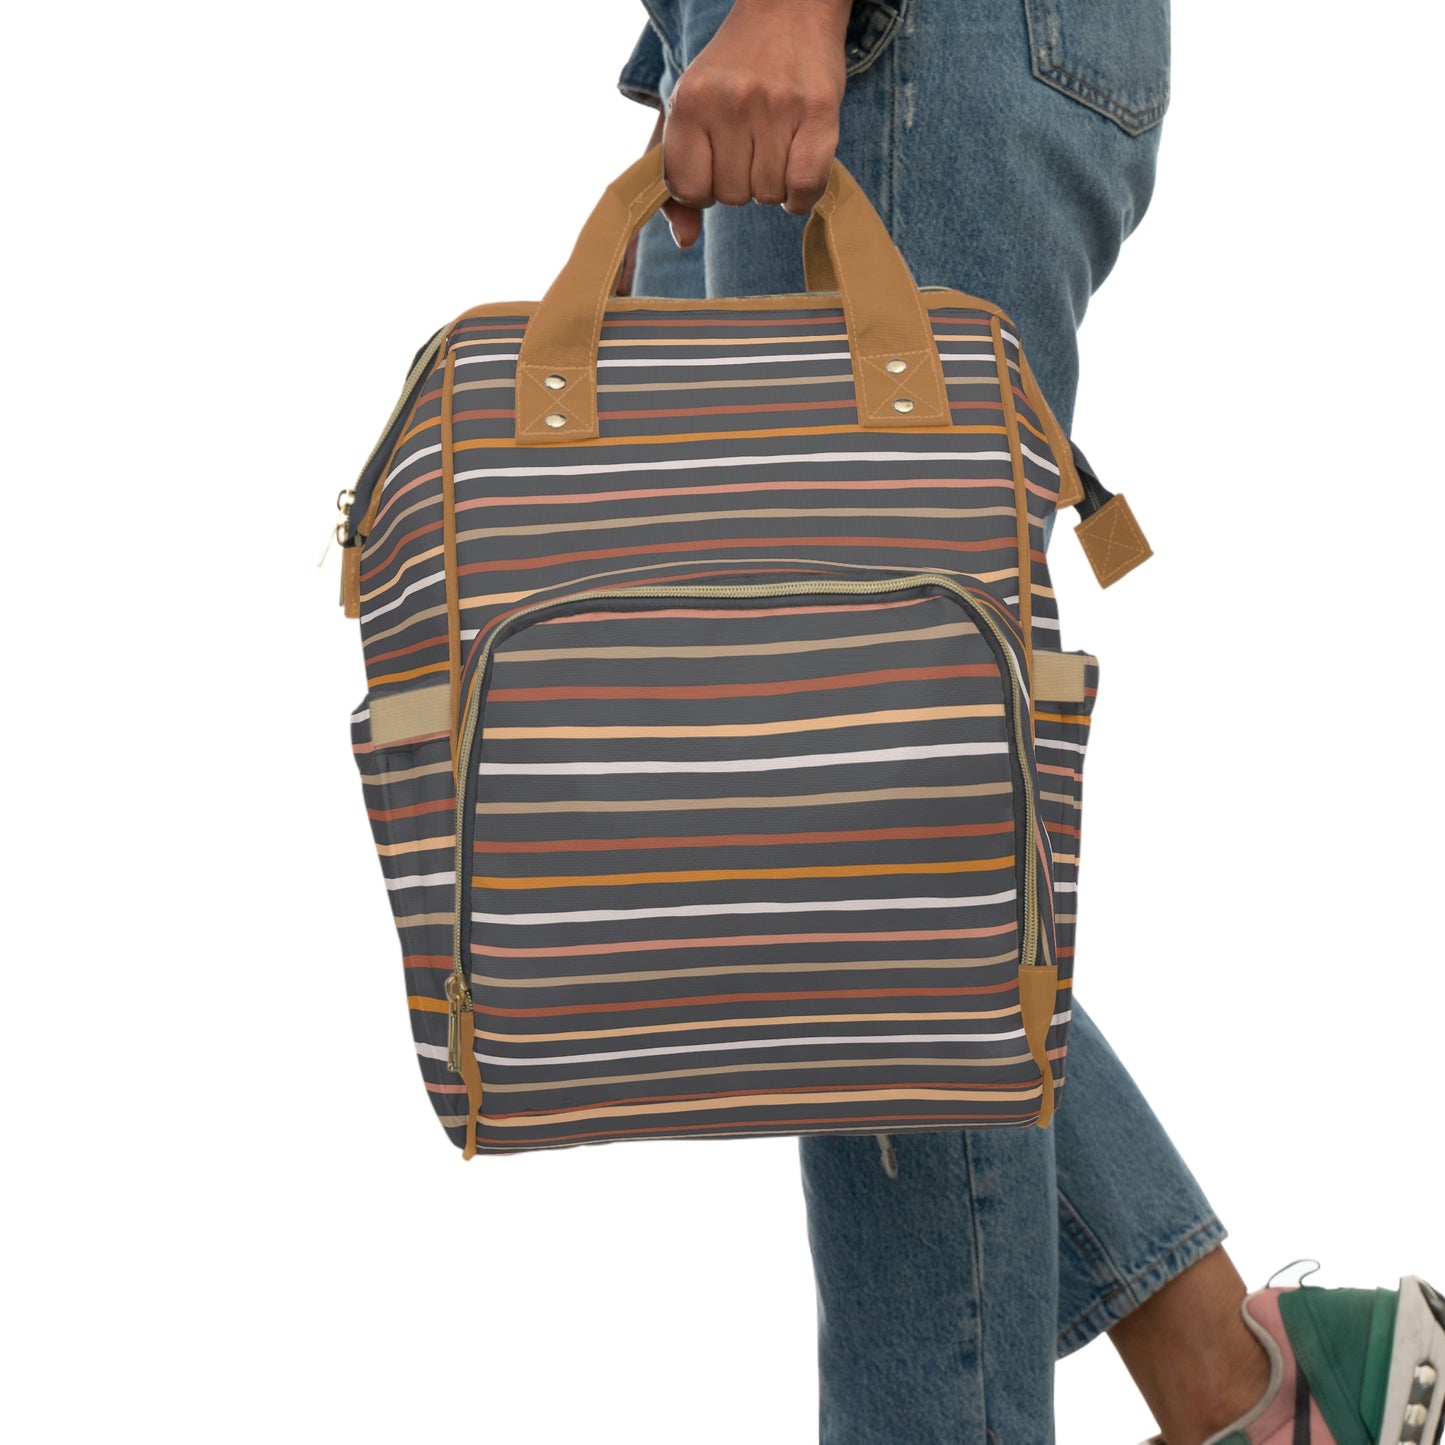 Neutral Stripes Backpack